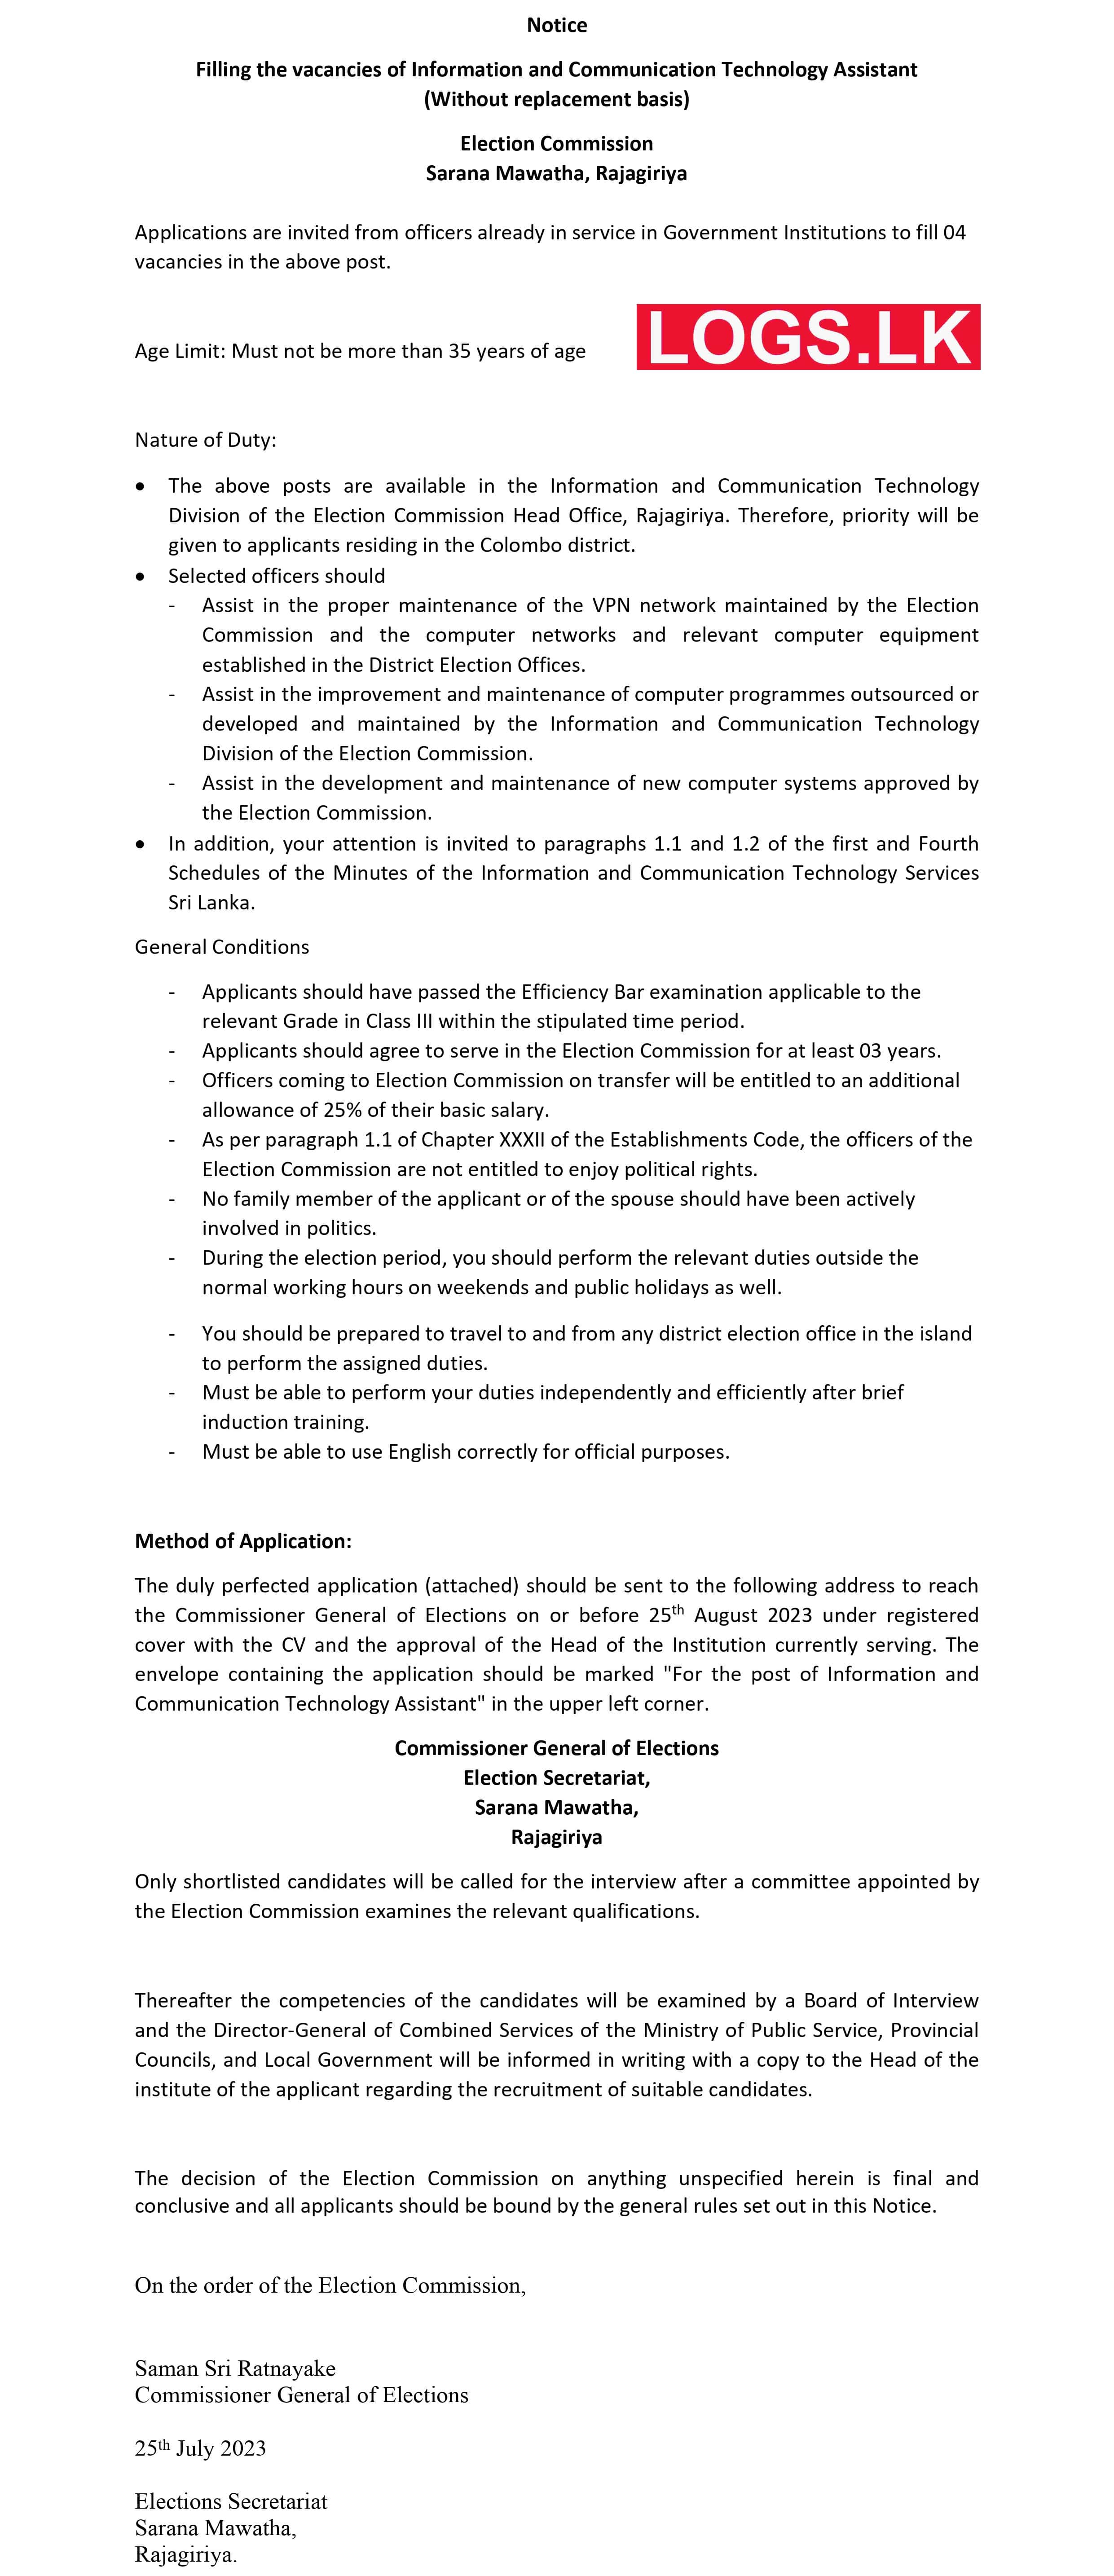 ICT Assistant - Election Commission of Sri Lanka Vacancies 2023 Application Form, Details Download